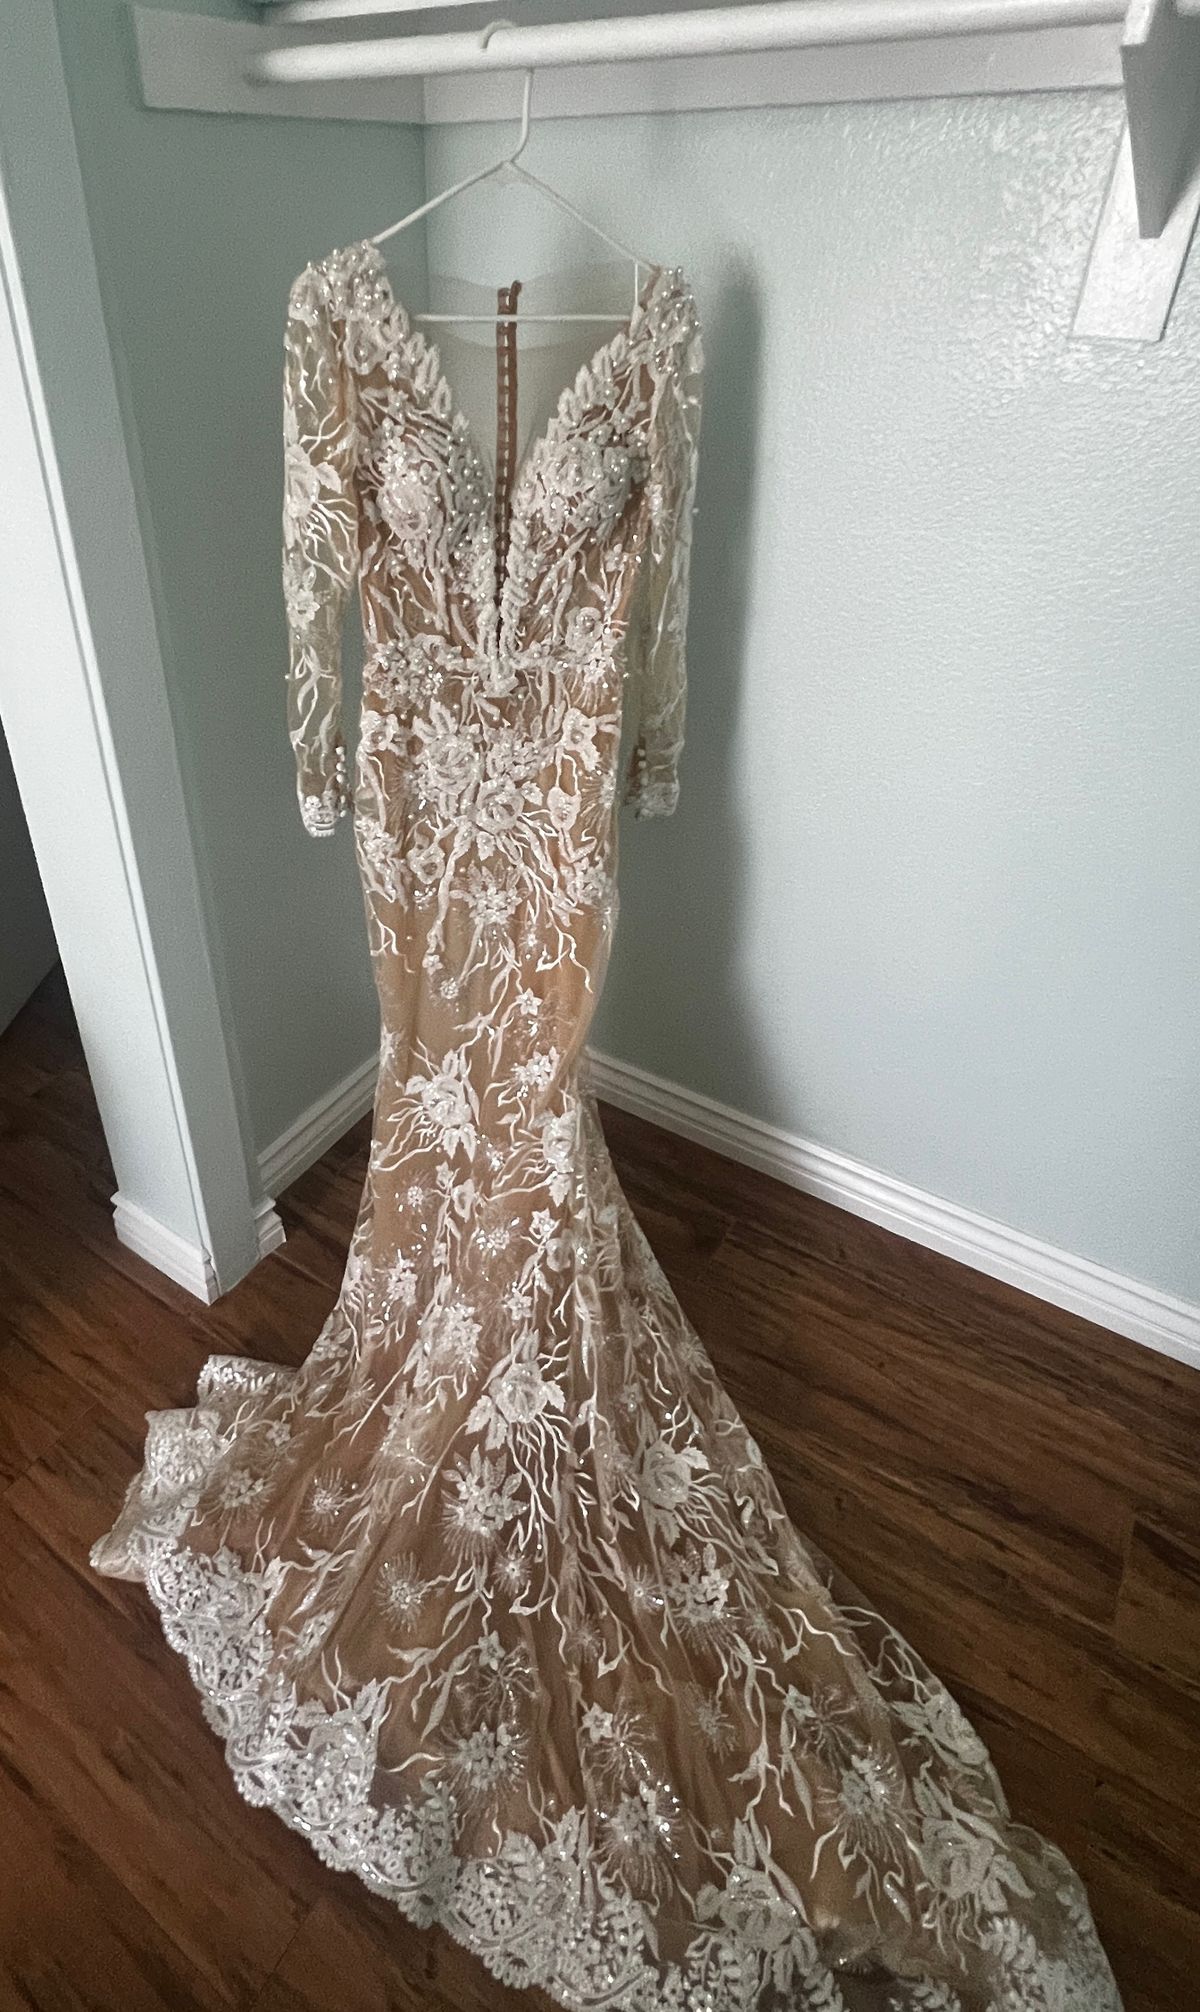 Style ARUNA Vlora Kaltrina Size M Wedding Plunge Lace White Mermaid Dress on Queenly